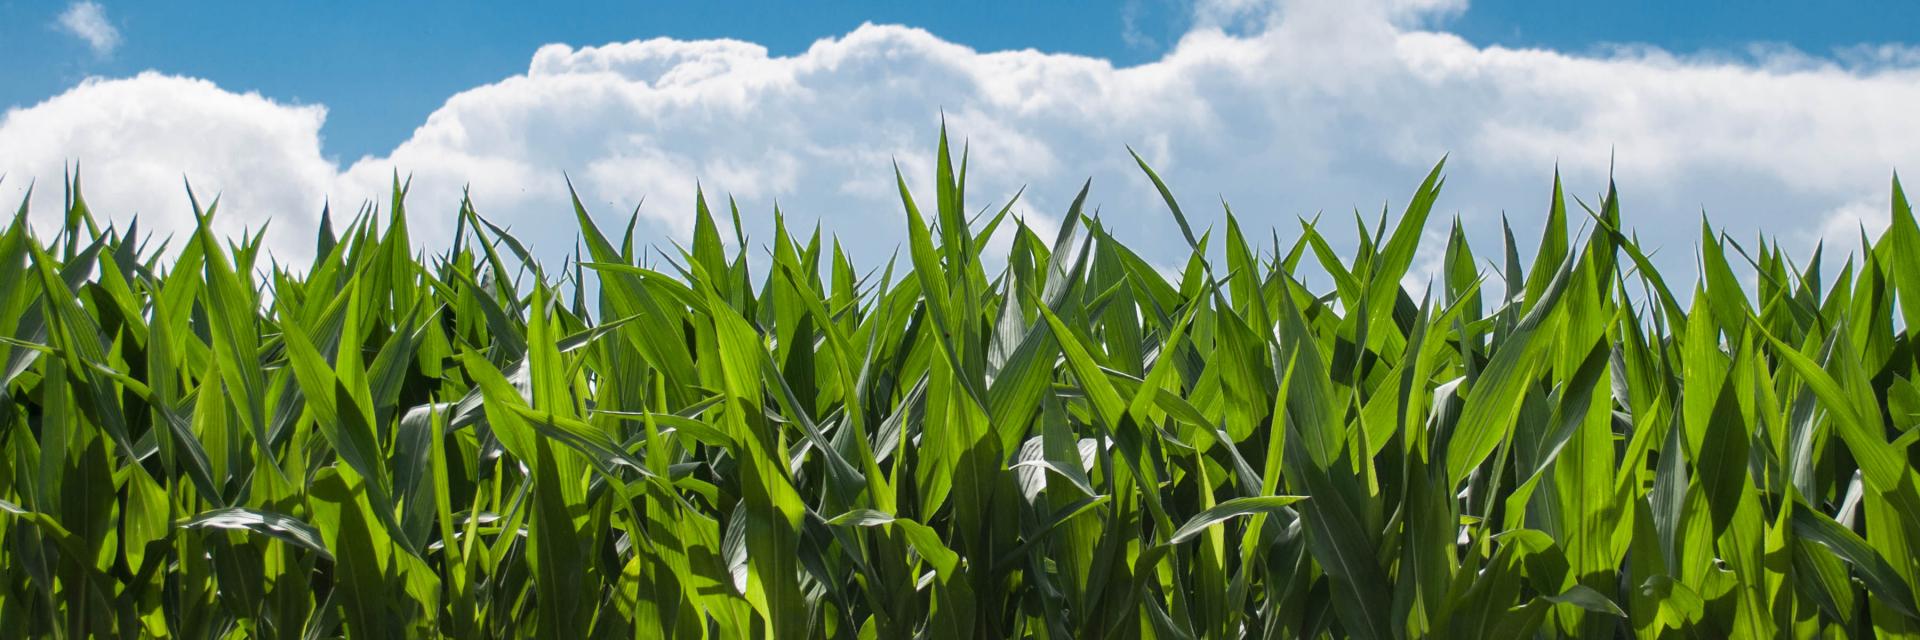 cornfield against sky